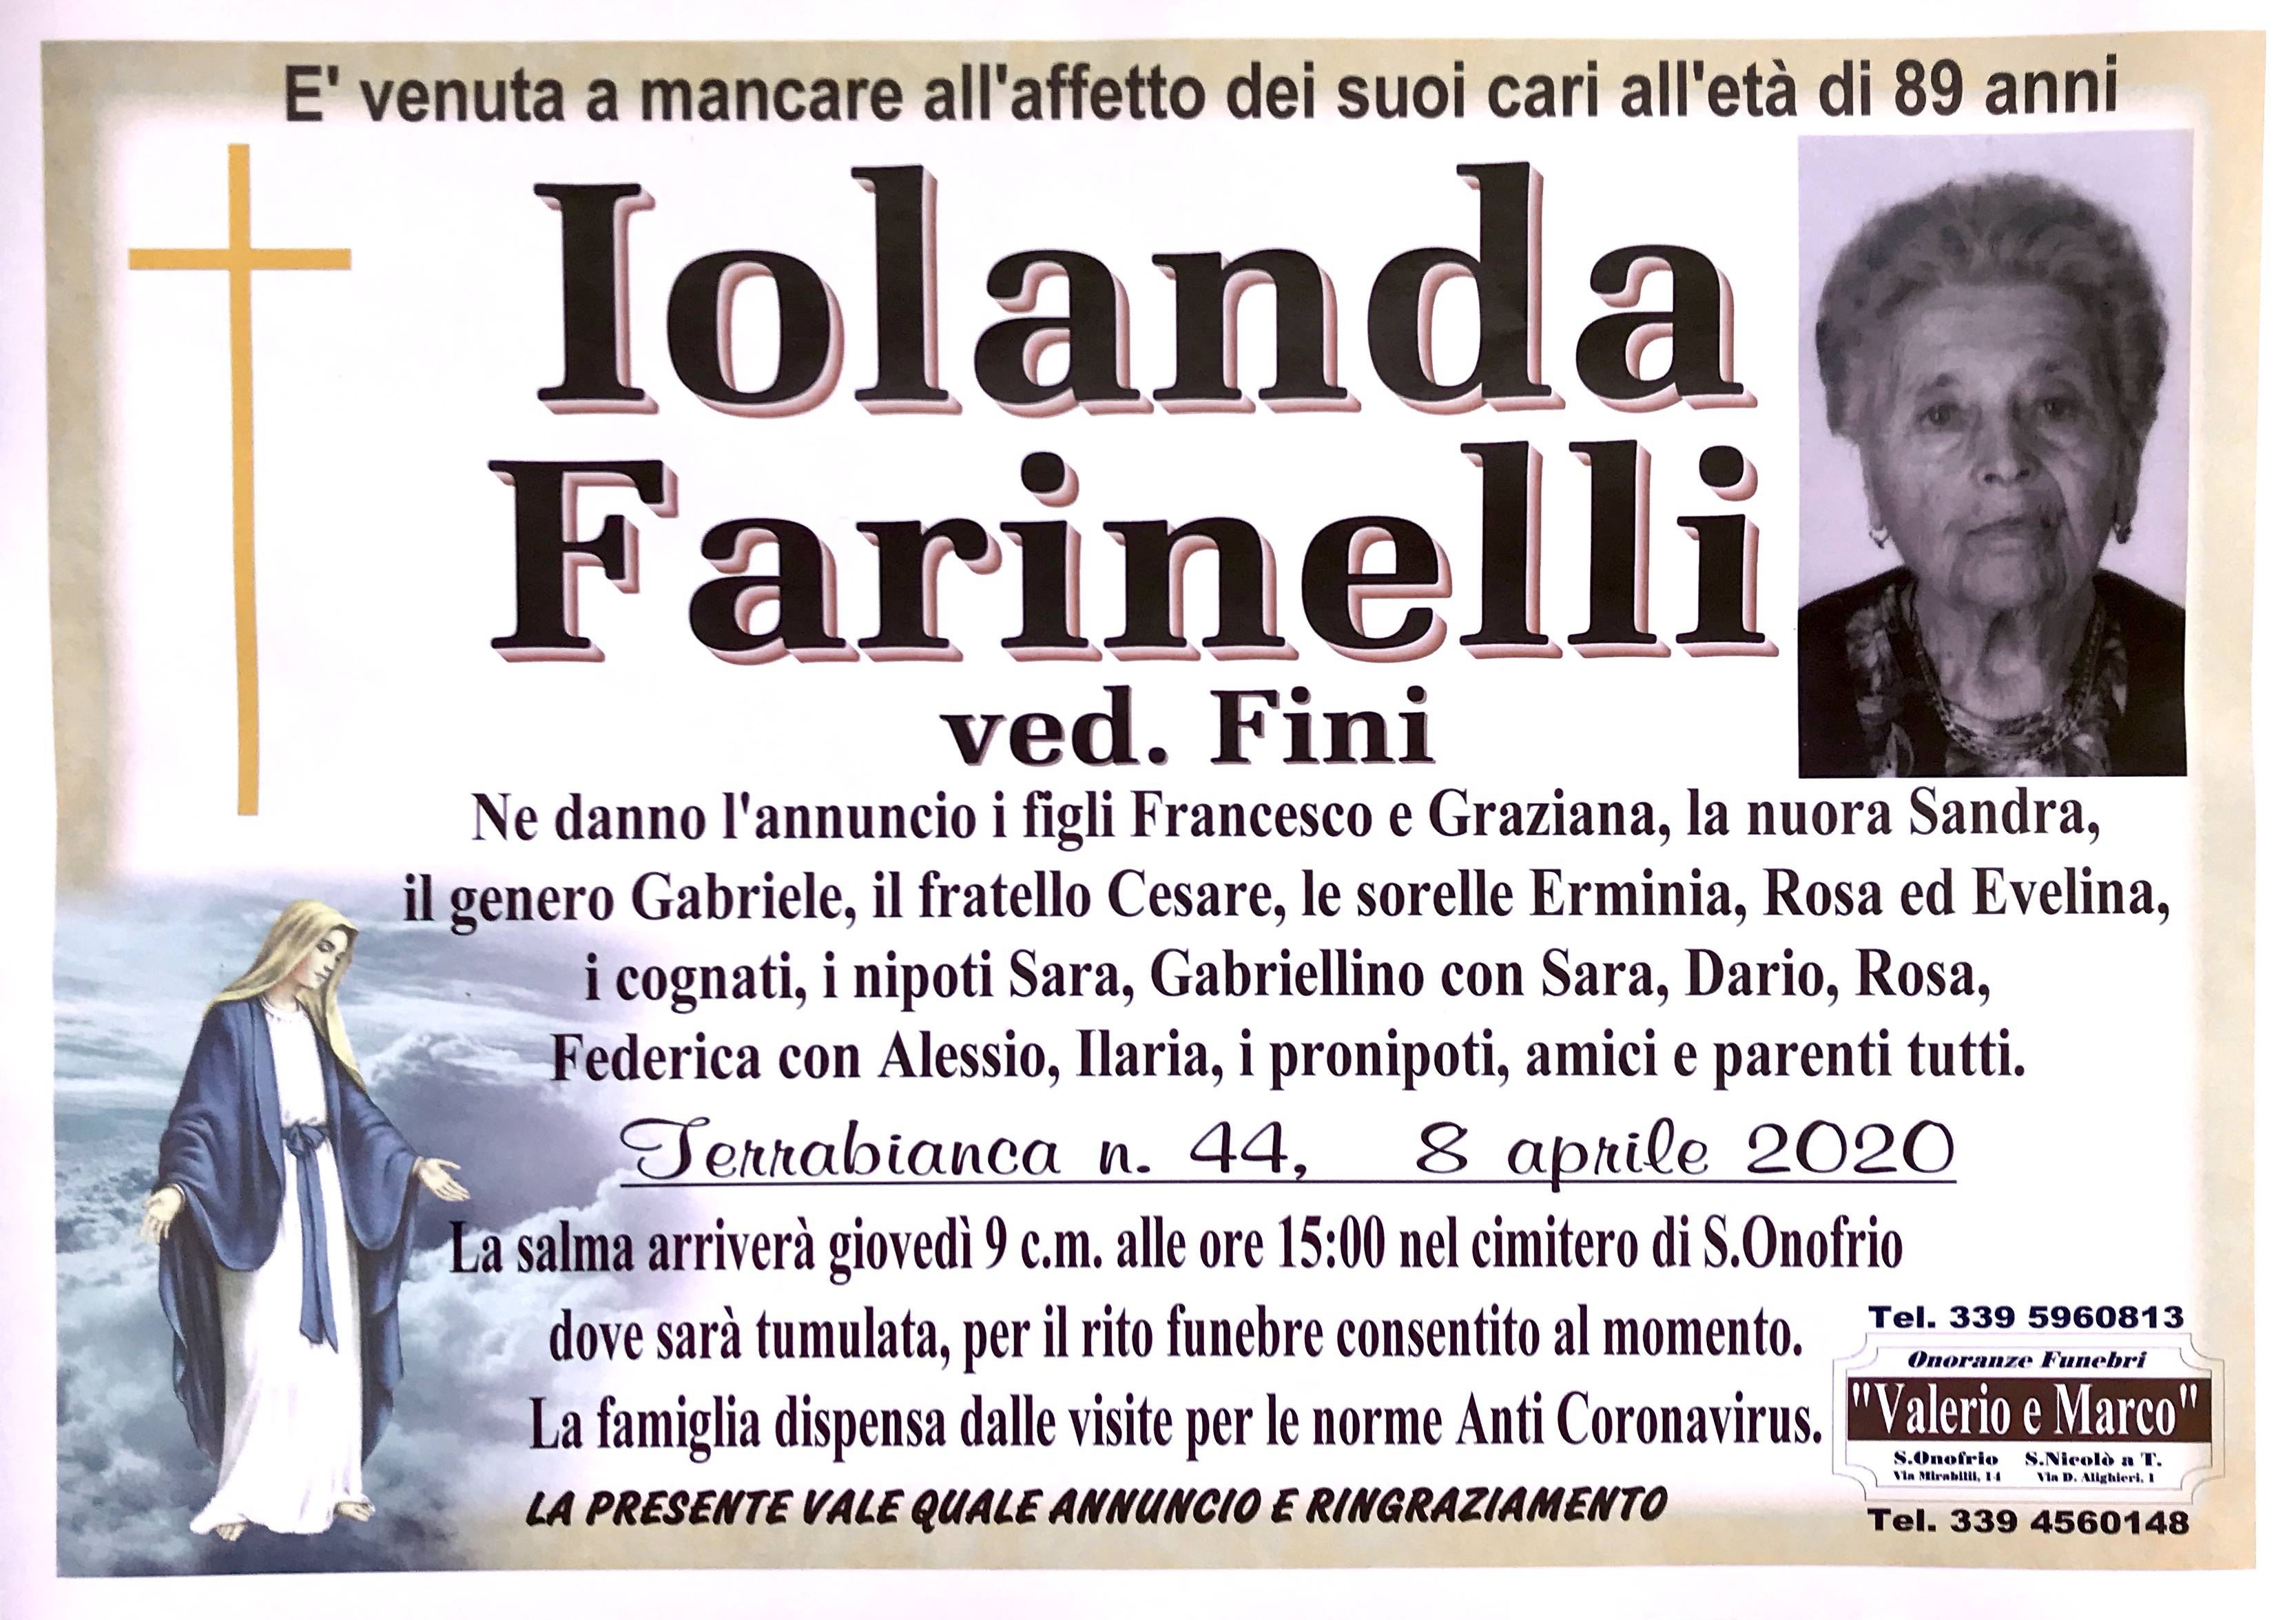 Iolanda Farinelli